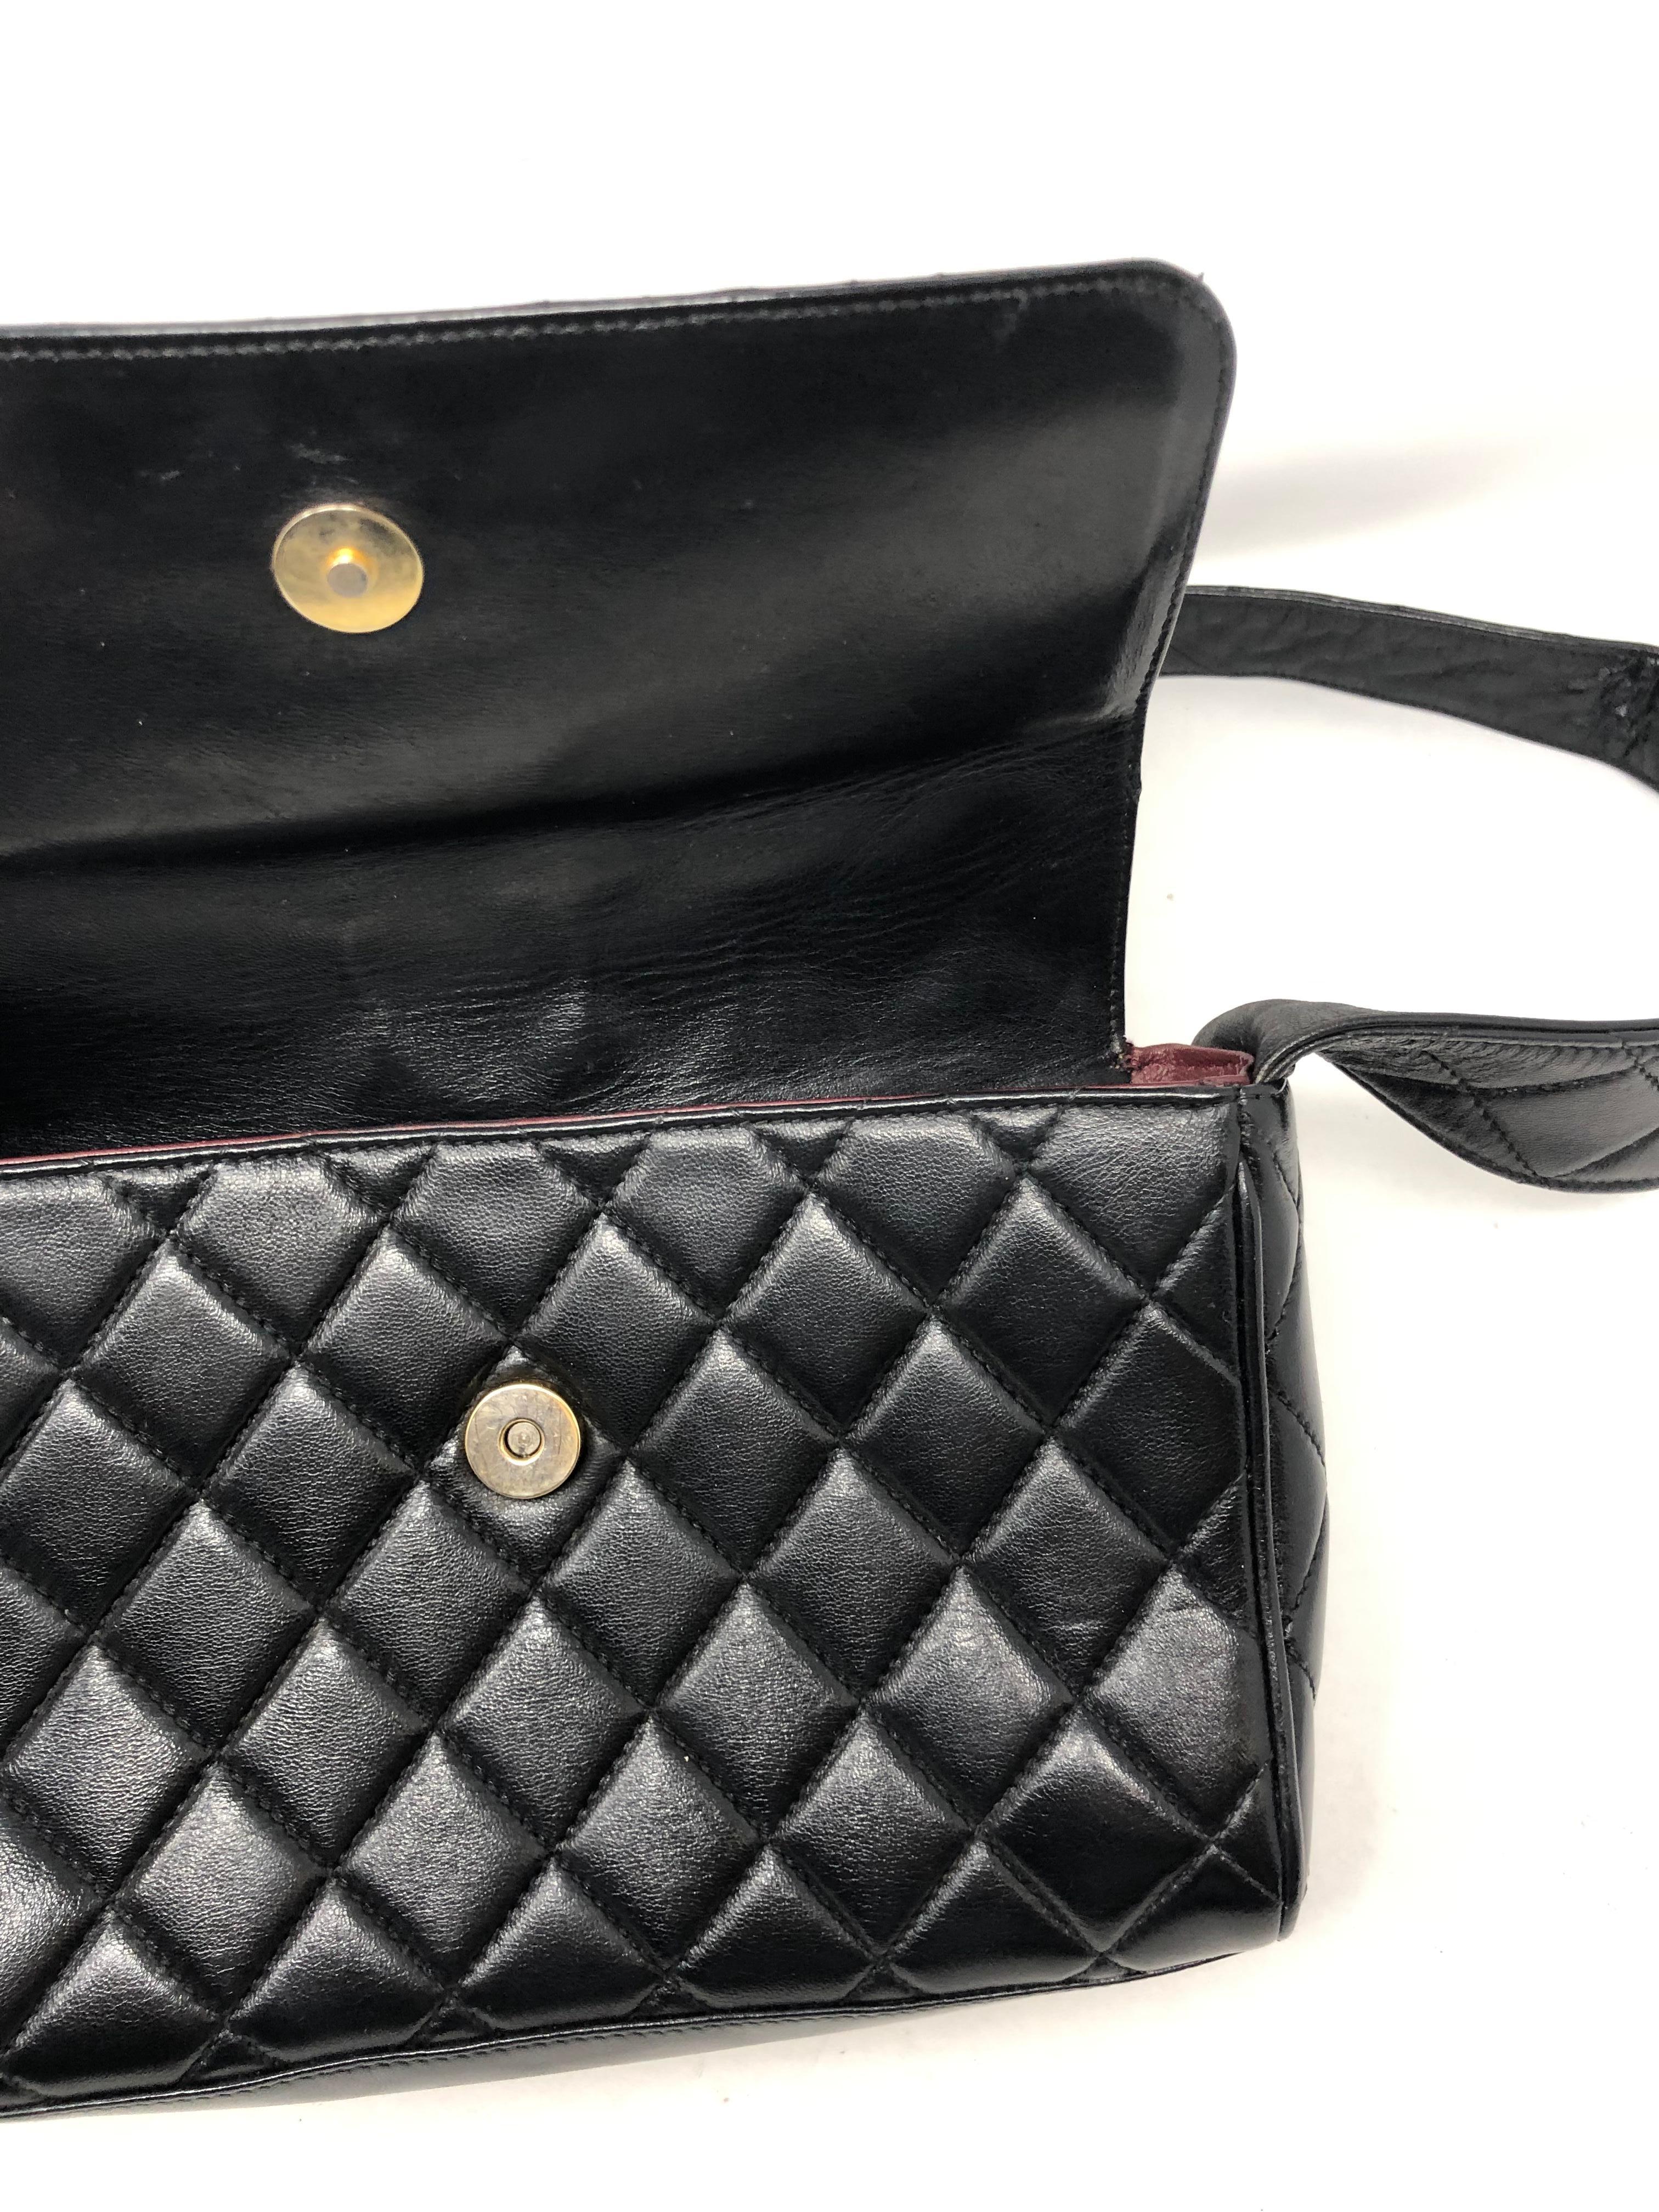 Chanel Black Leather Crossbody Bag 2